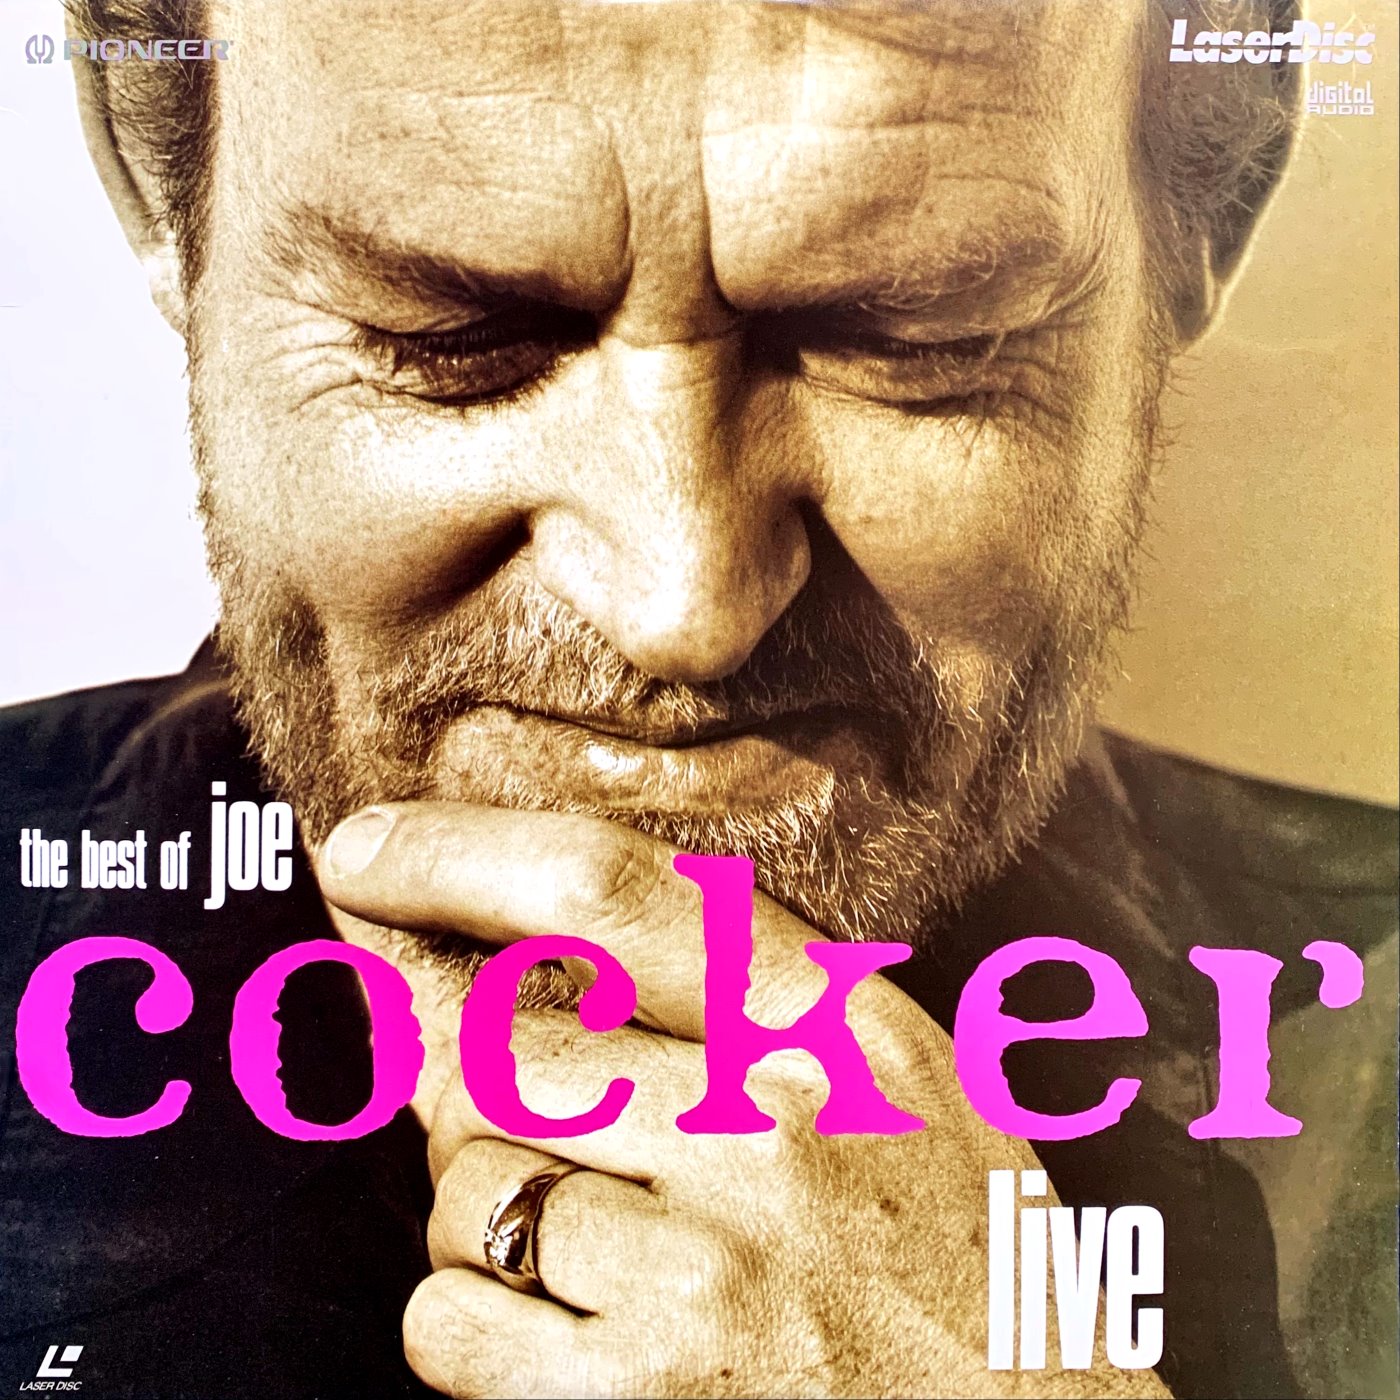 Cover - The Best of Joe Cocker Live.jpg